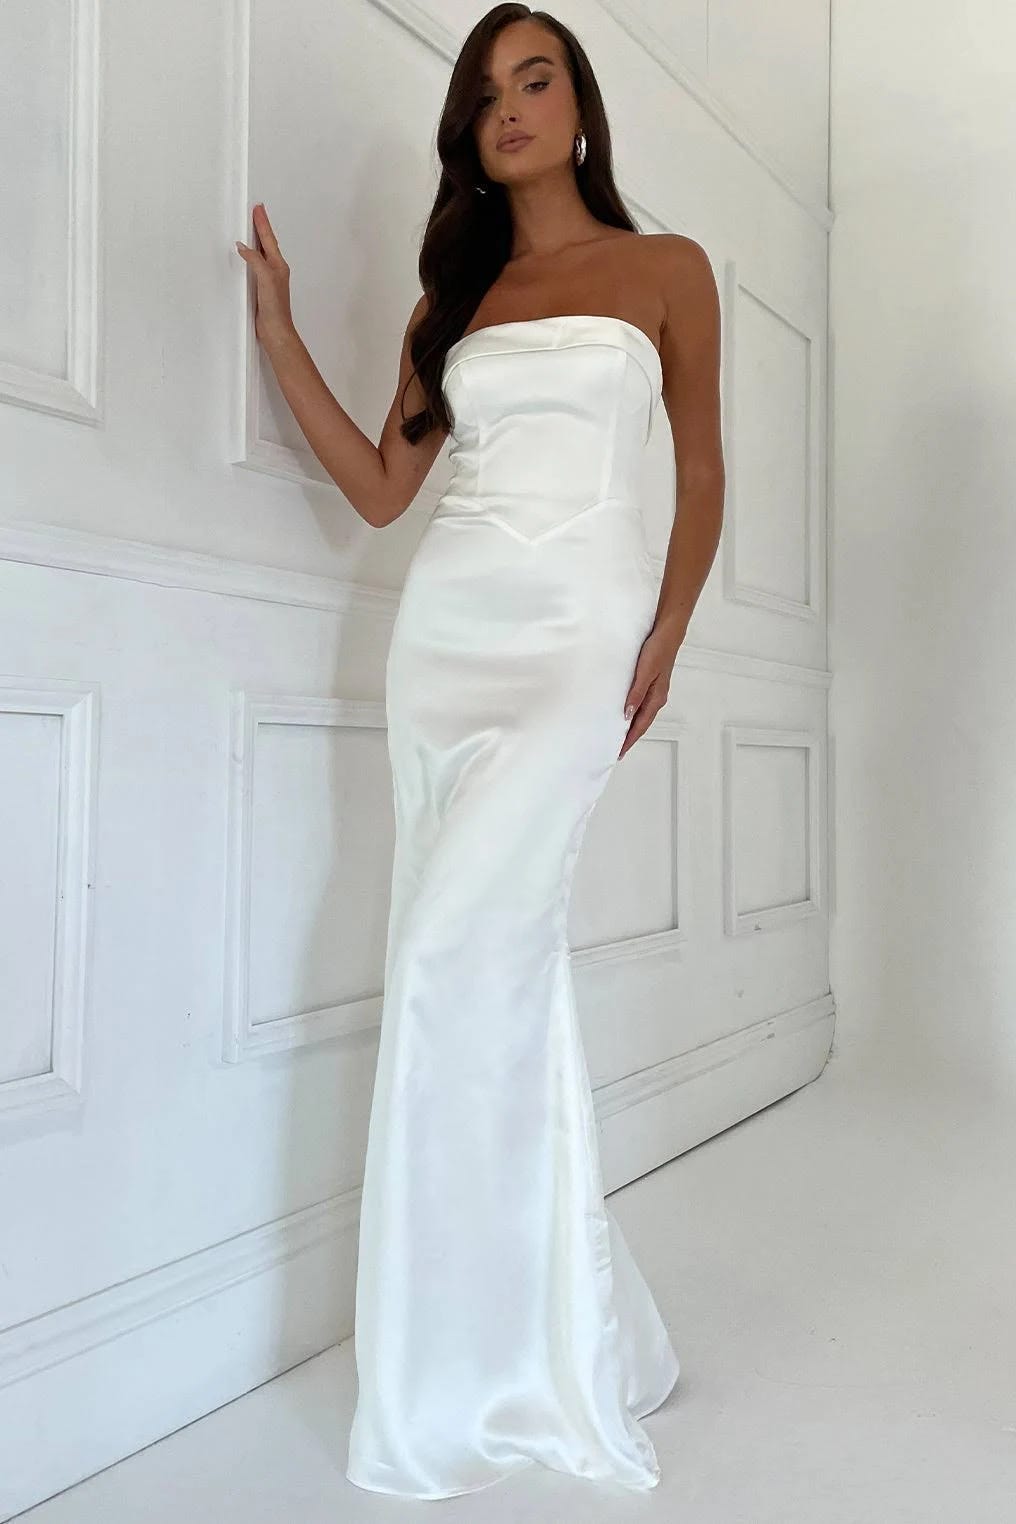 Mesmerizing White Strapless Gown for Elegant Brides | Image